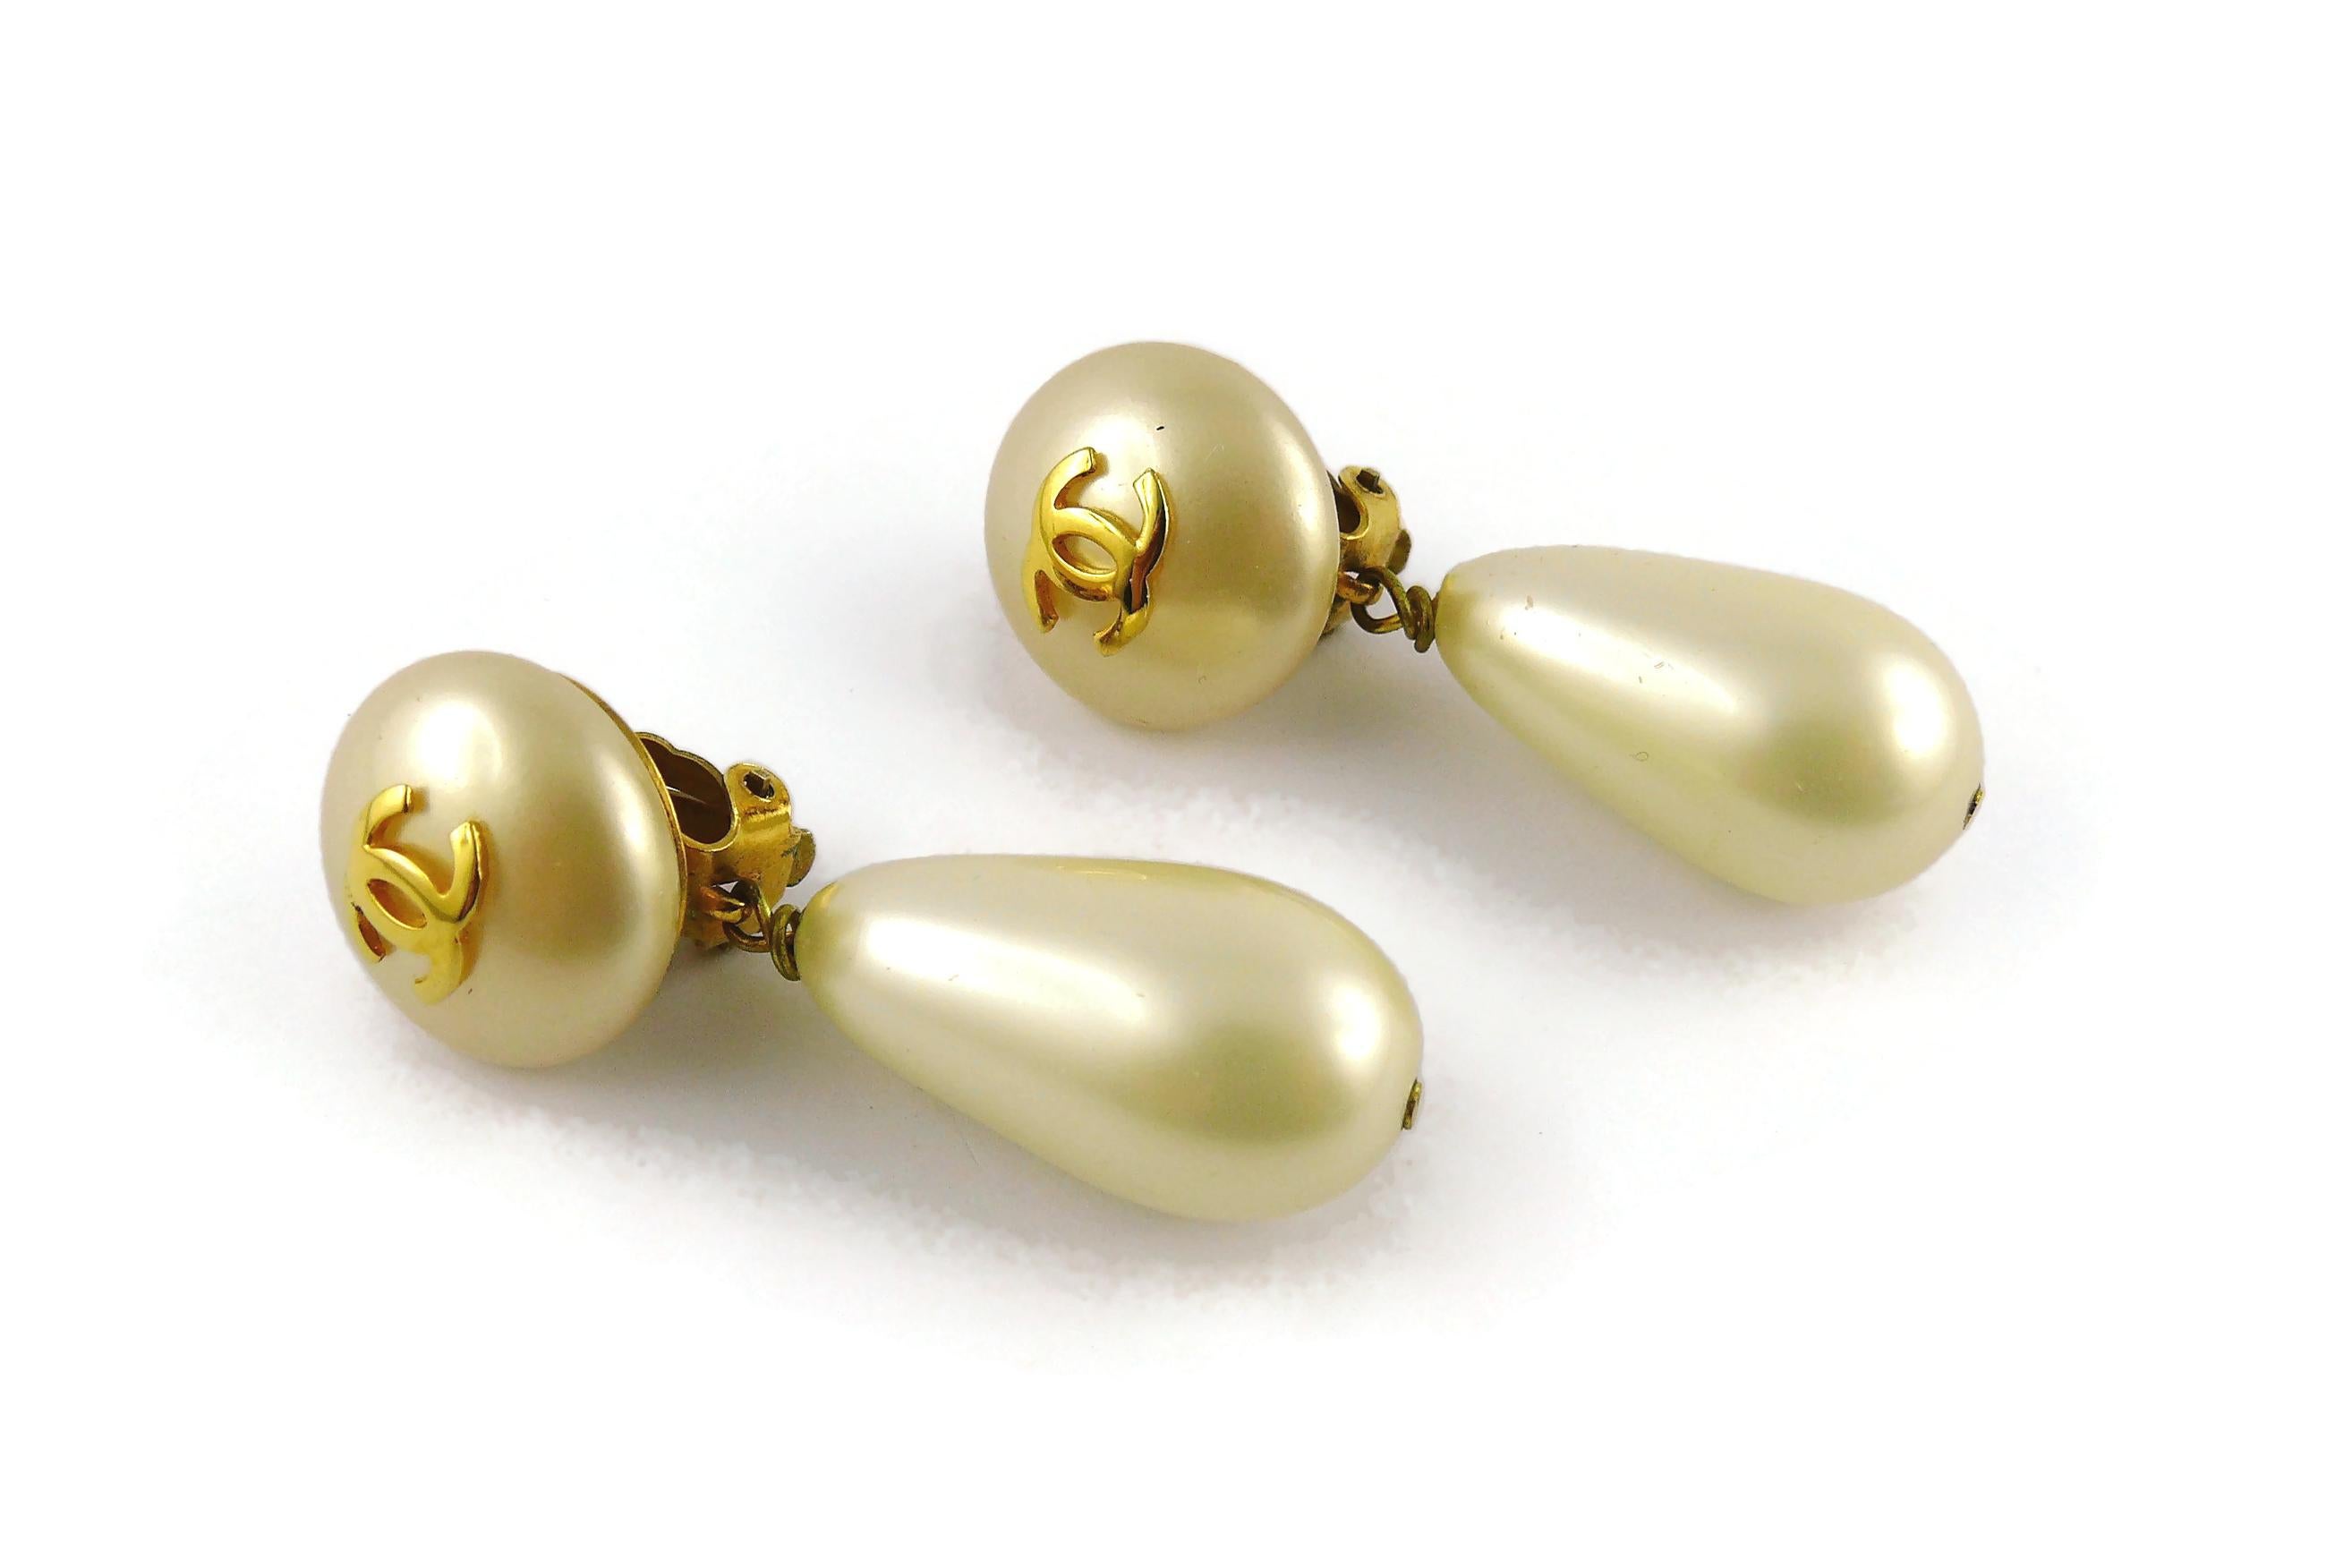 chanel earrings with pearl drop